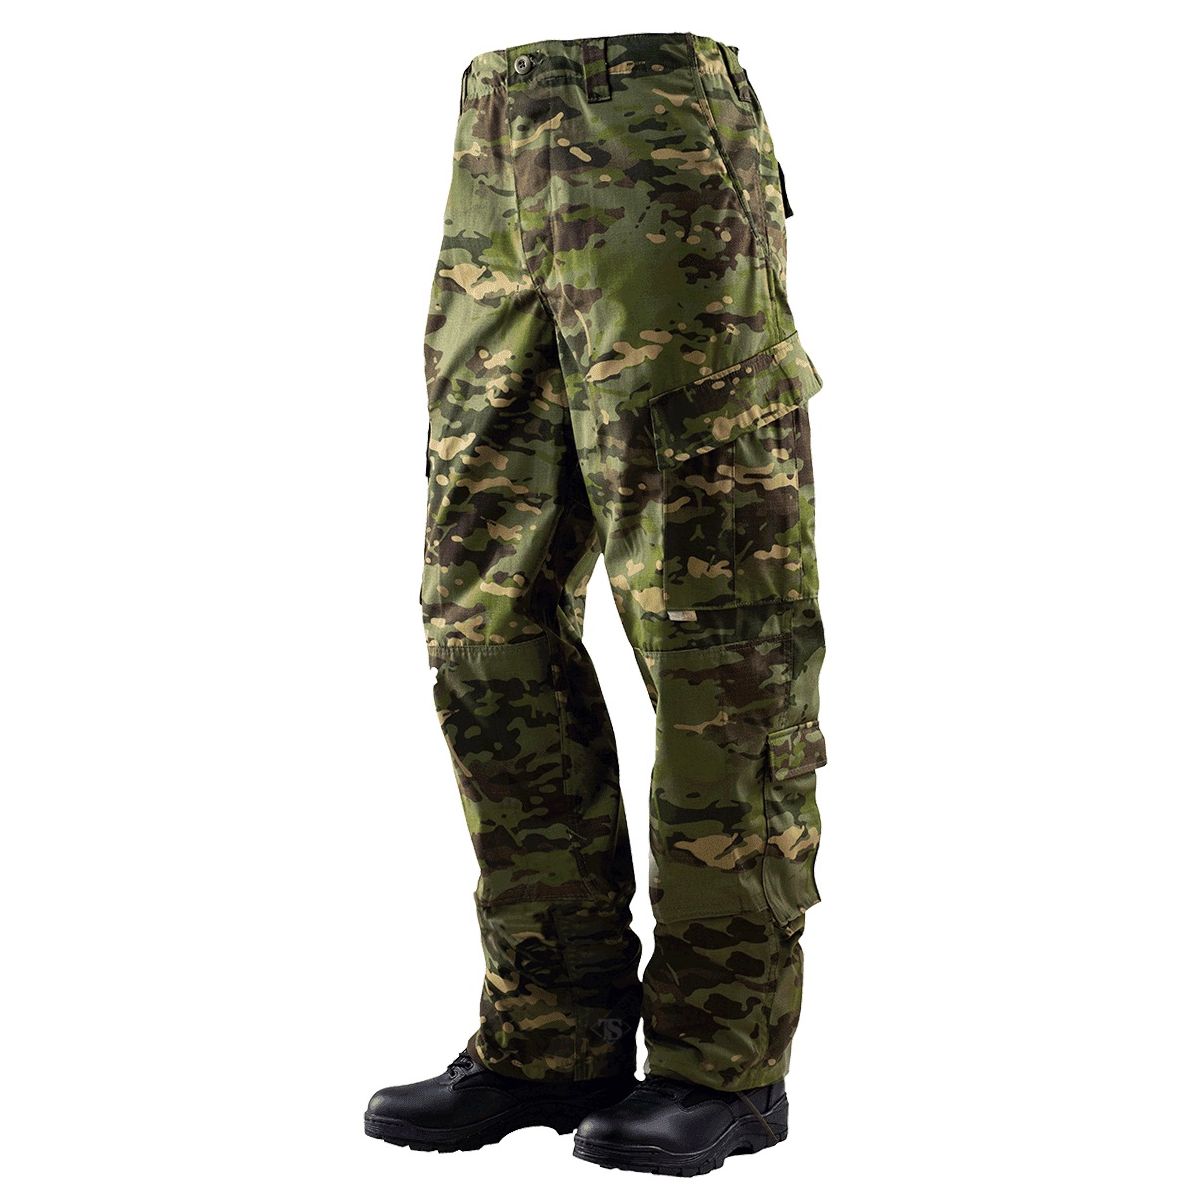 TRU-SPEC Pants TRU MULTICAM TROPIC rip-stop Cordura | Army surplus ...